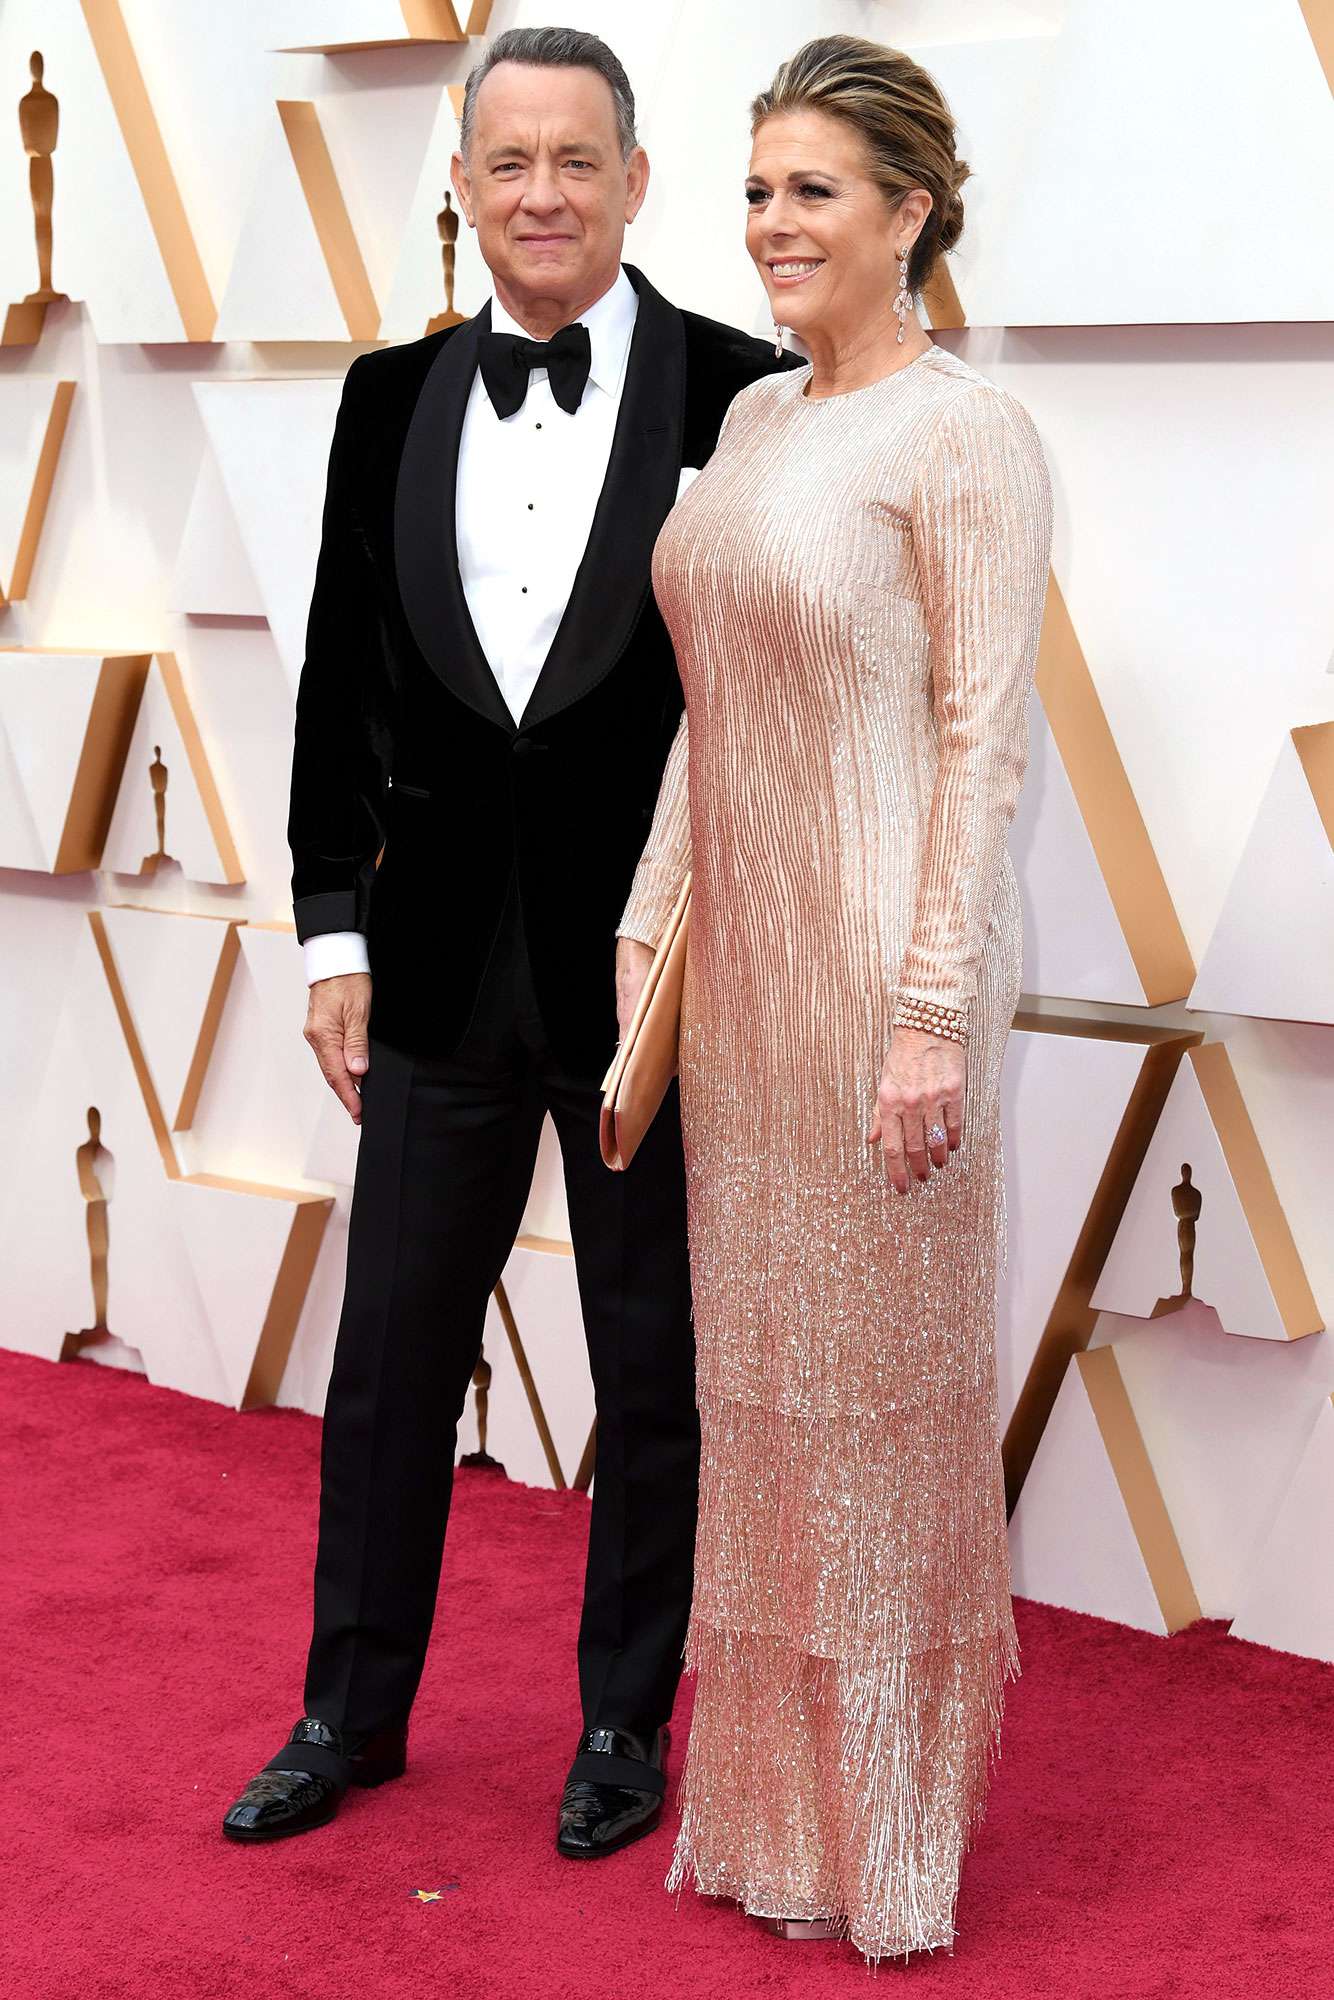 Stars Send Well Wishes to Tom Hanks and Rita Wilson After Coronavirus Diagnosis